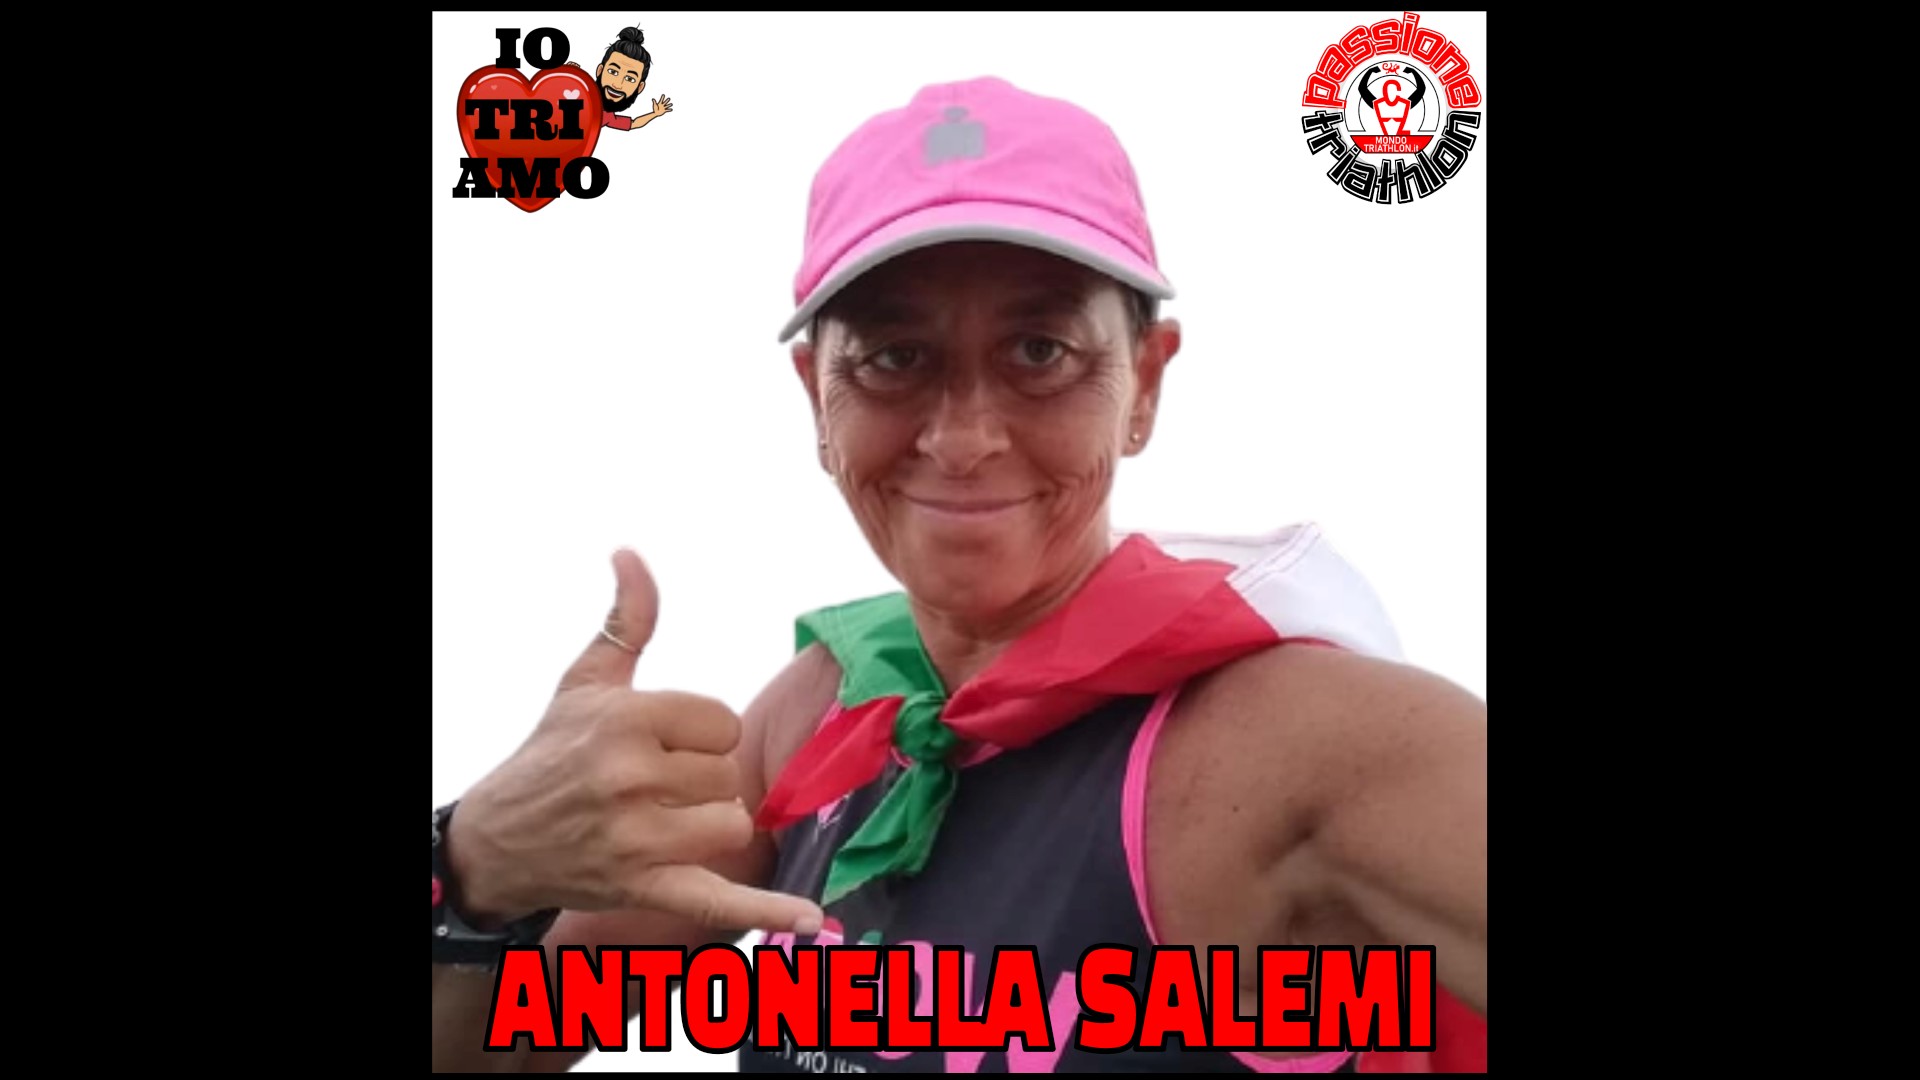 Antonella Salemi Passione Triathlon n° 103